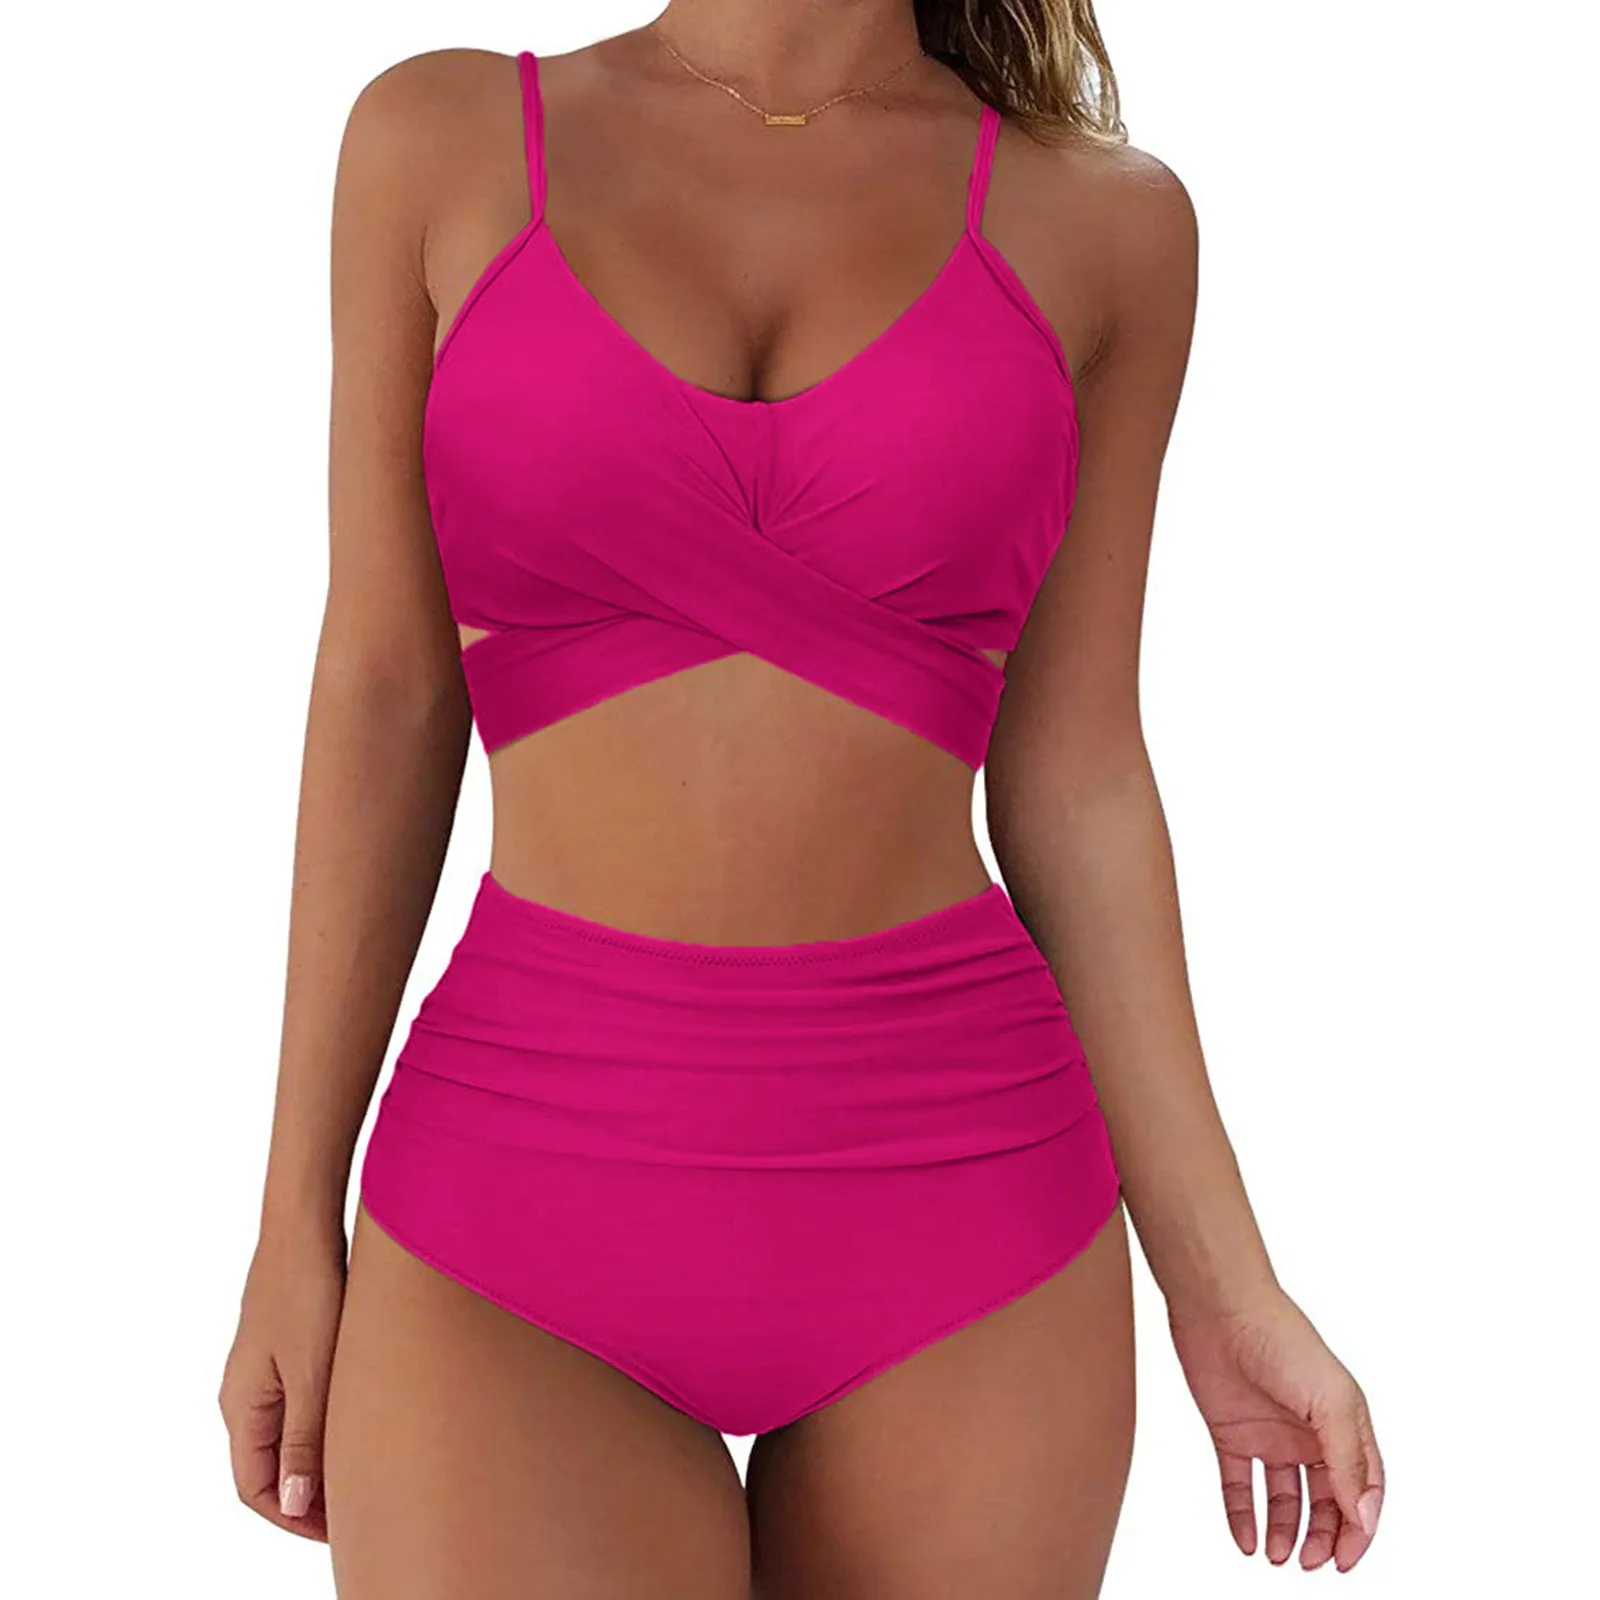 

Women Solid Color Bikinis Set Criss Cross Harness Belt Adjustable Strappy Swimsuits Swimwear Backless Bathing Suits Beachwear